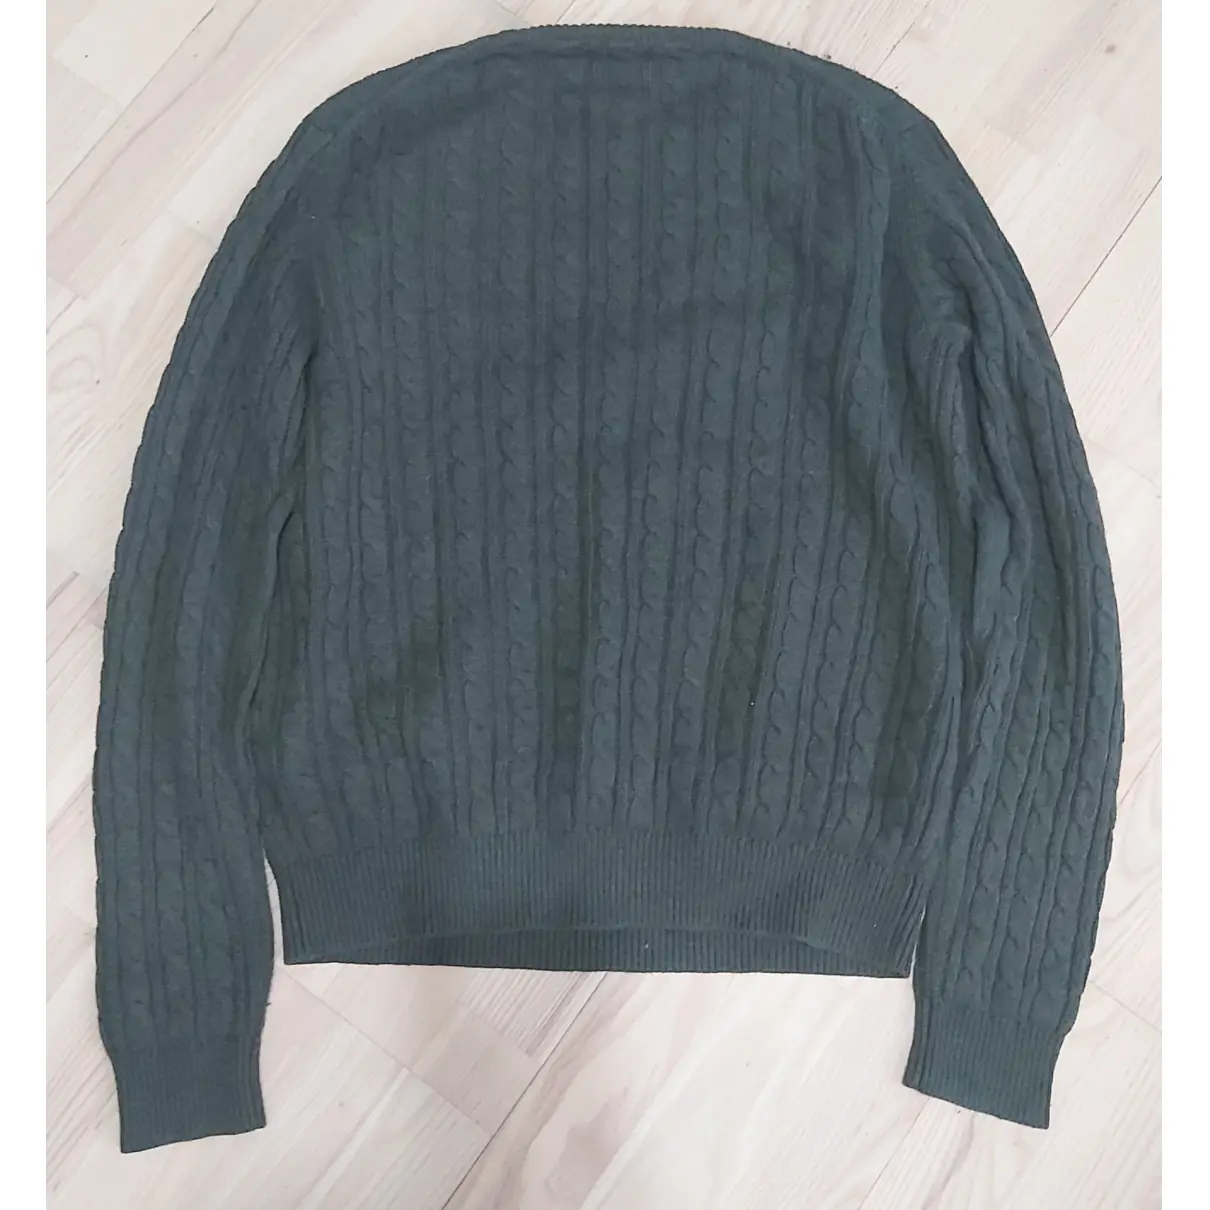 Buy Farah Sweatshirt online